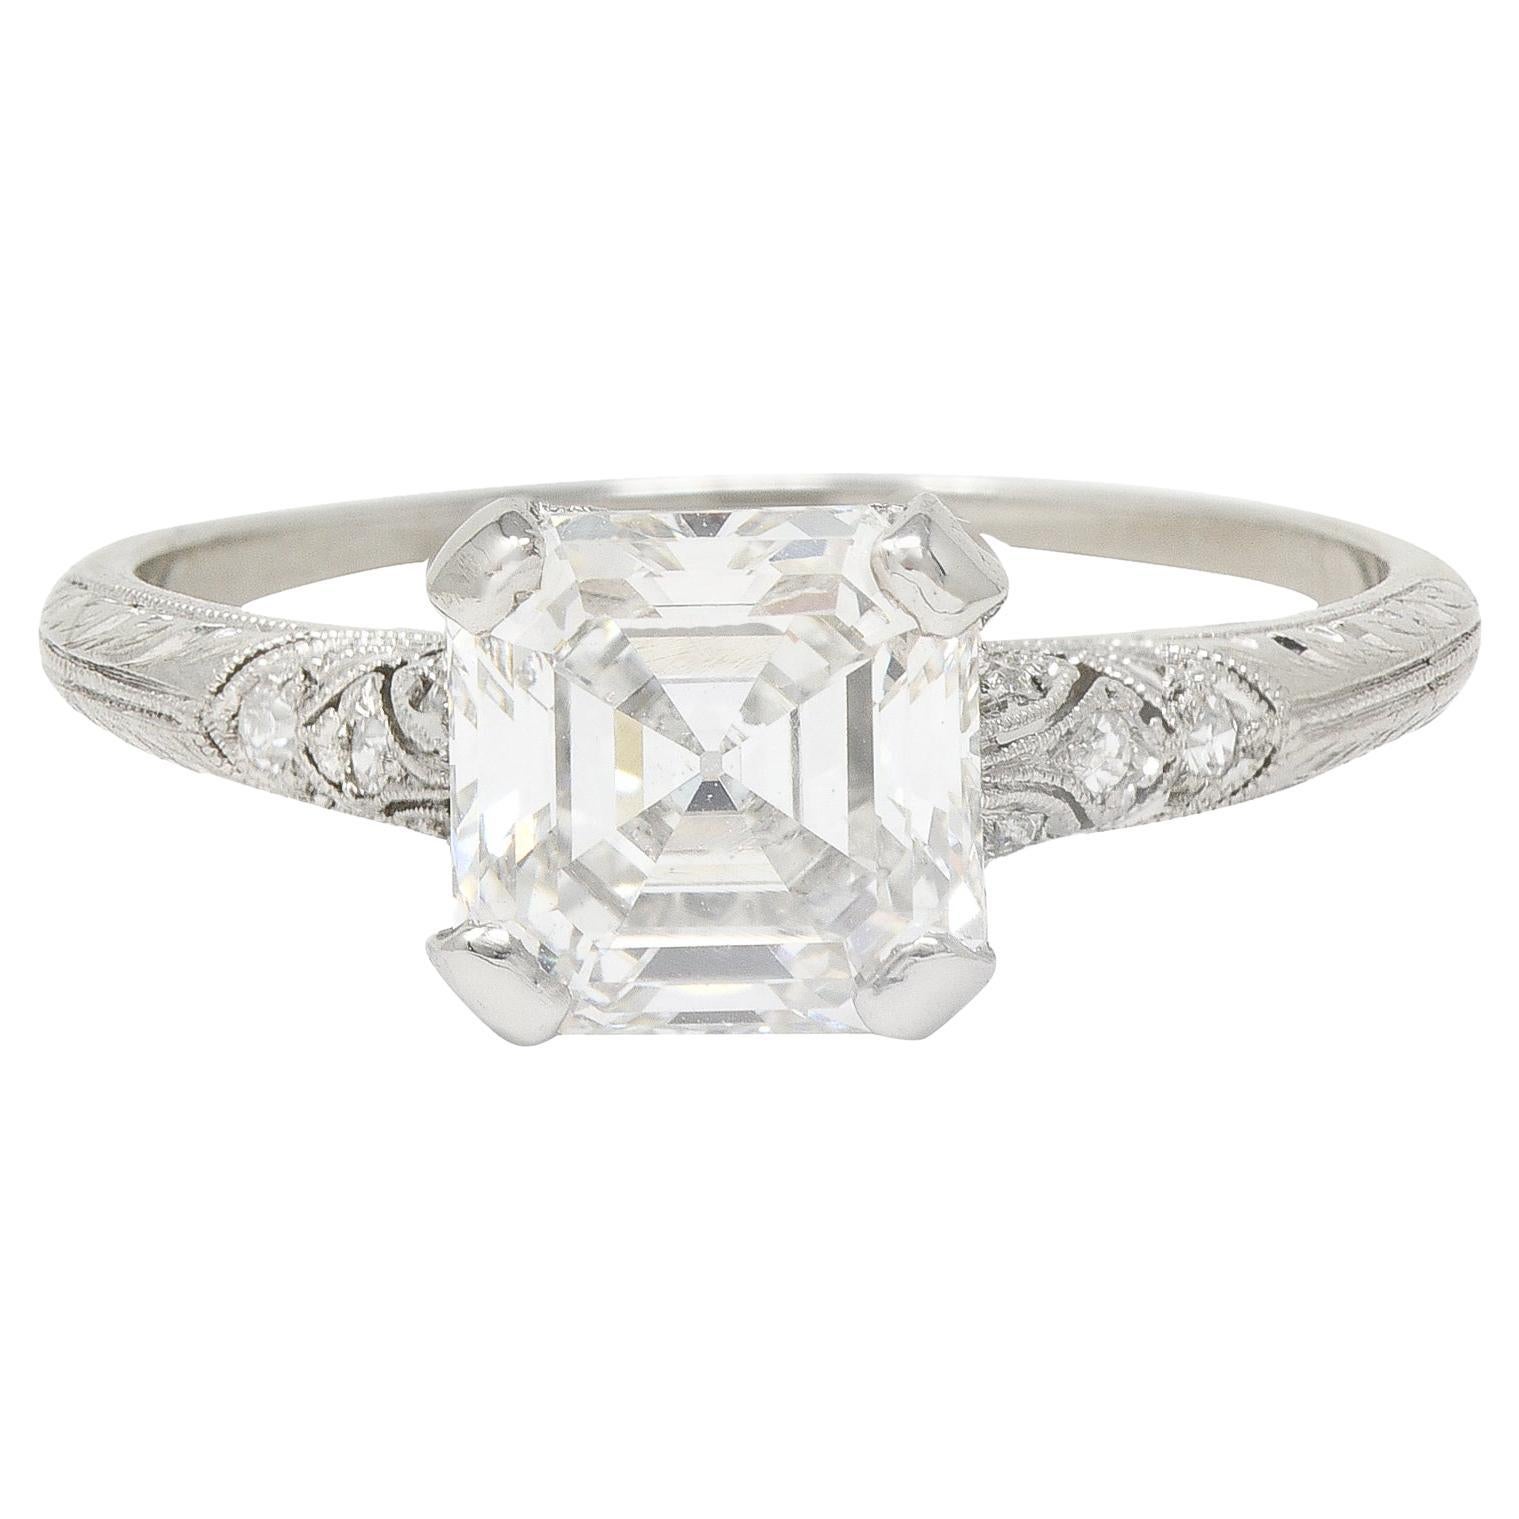 Tiffany & Co. Art Deco 1.88 CTW Asscher Cut Diamond Platinum Engagement Ring GIA